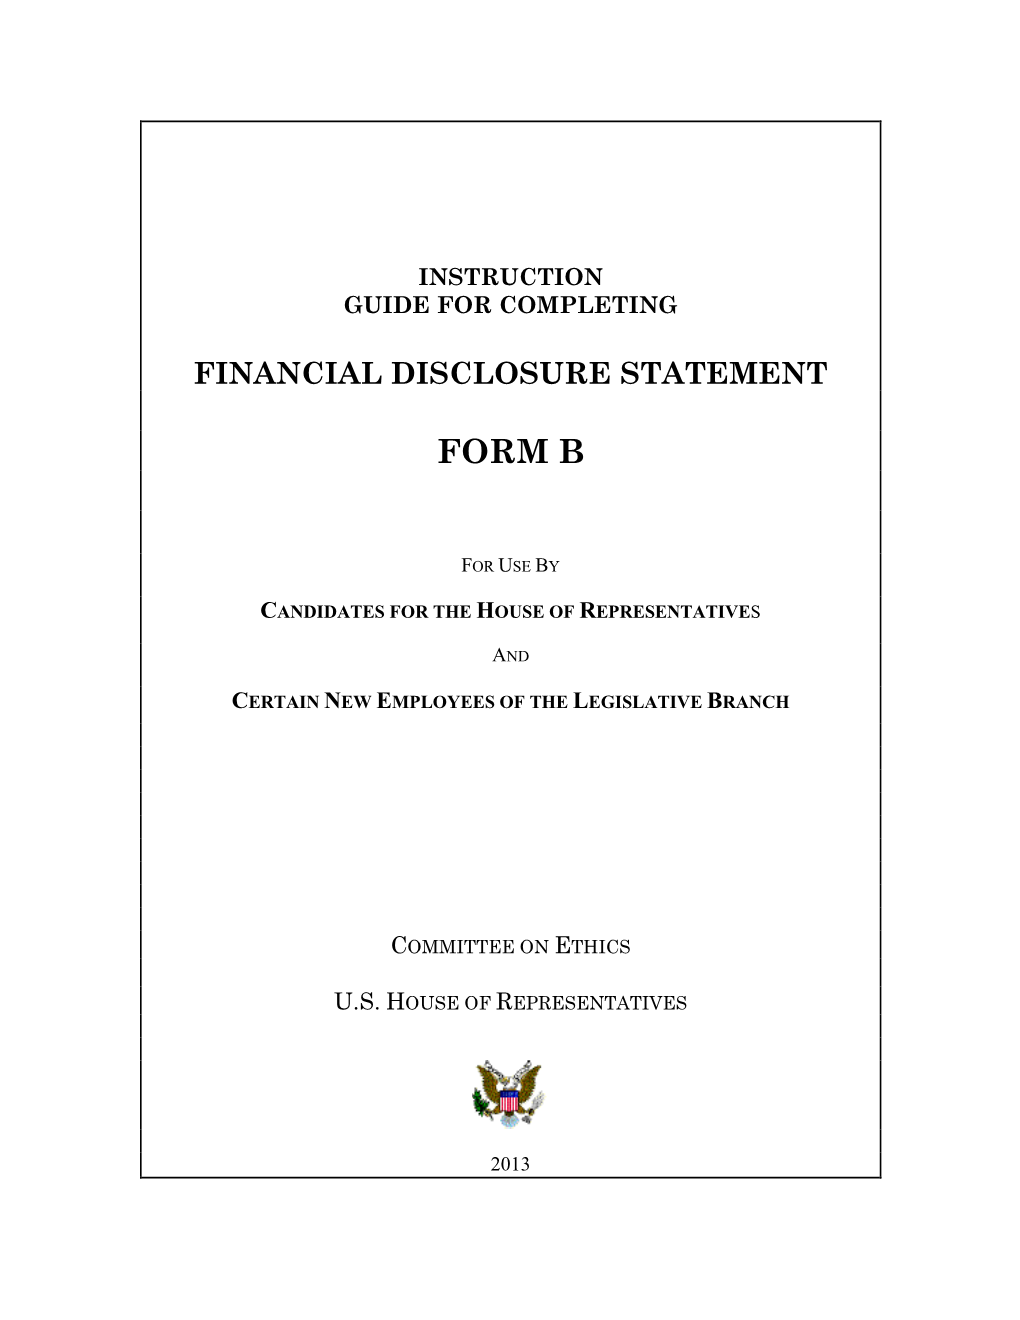 Financial Disclosure Statement